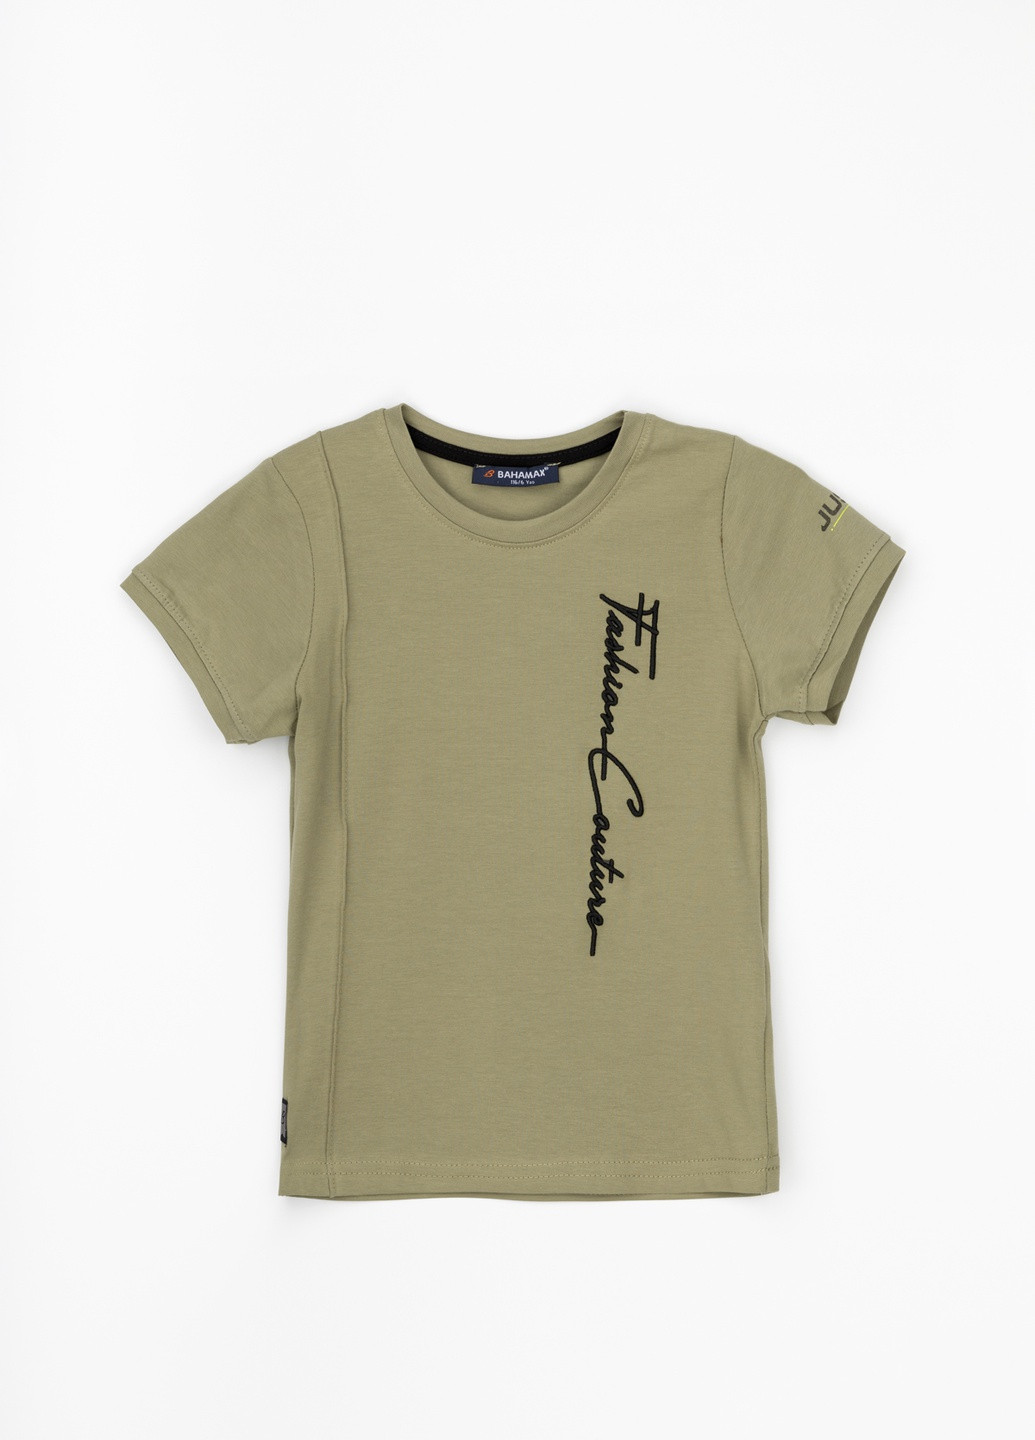 Хаки (оливковая) летняя футболка Bahamax